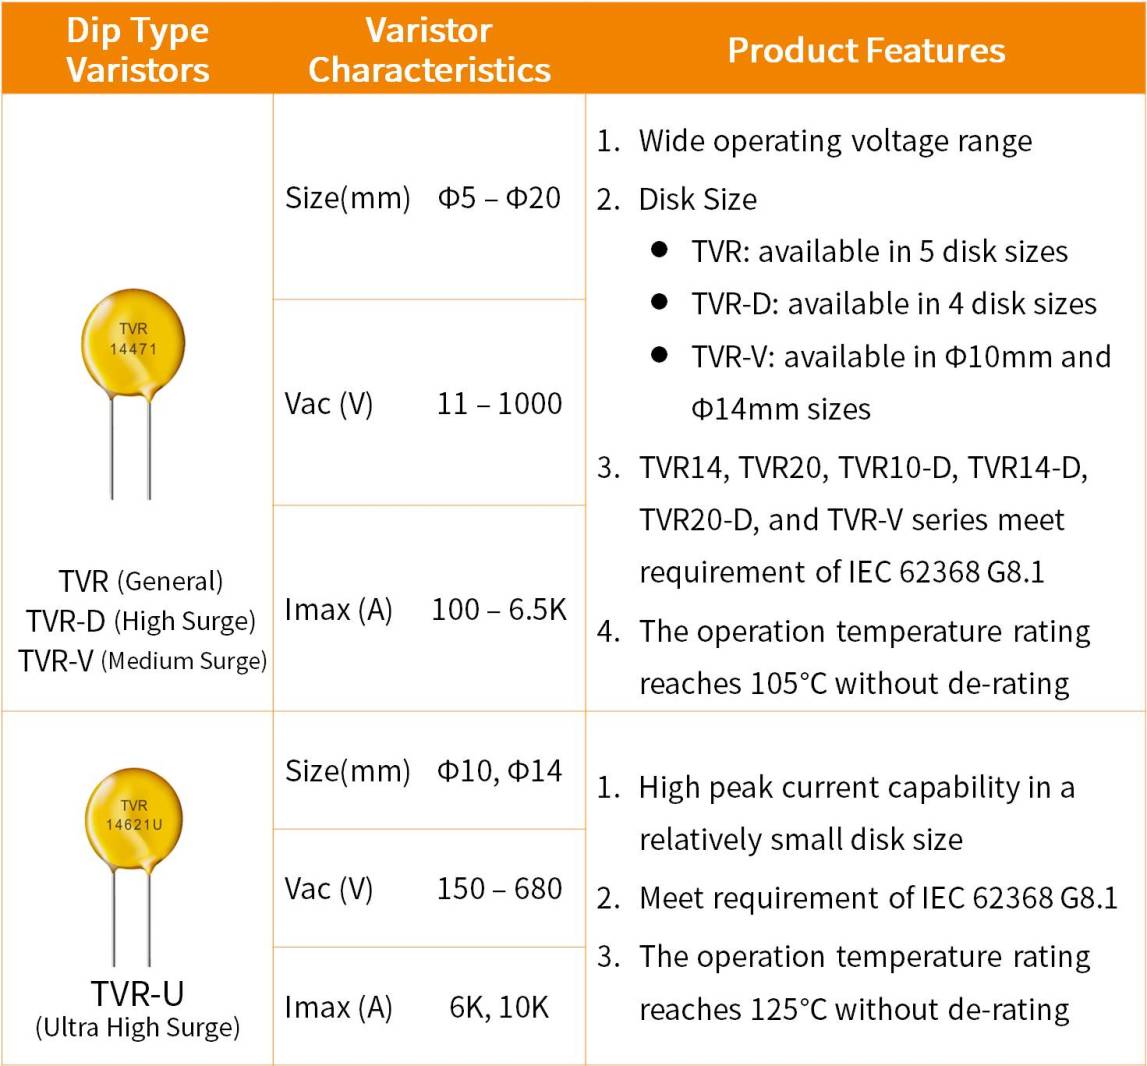 Comparison of TVR Series